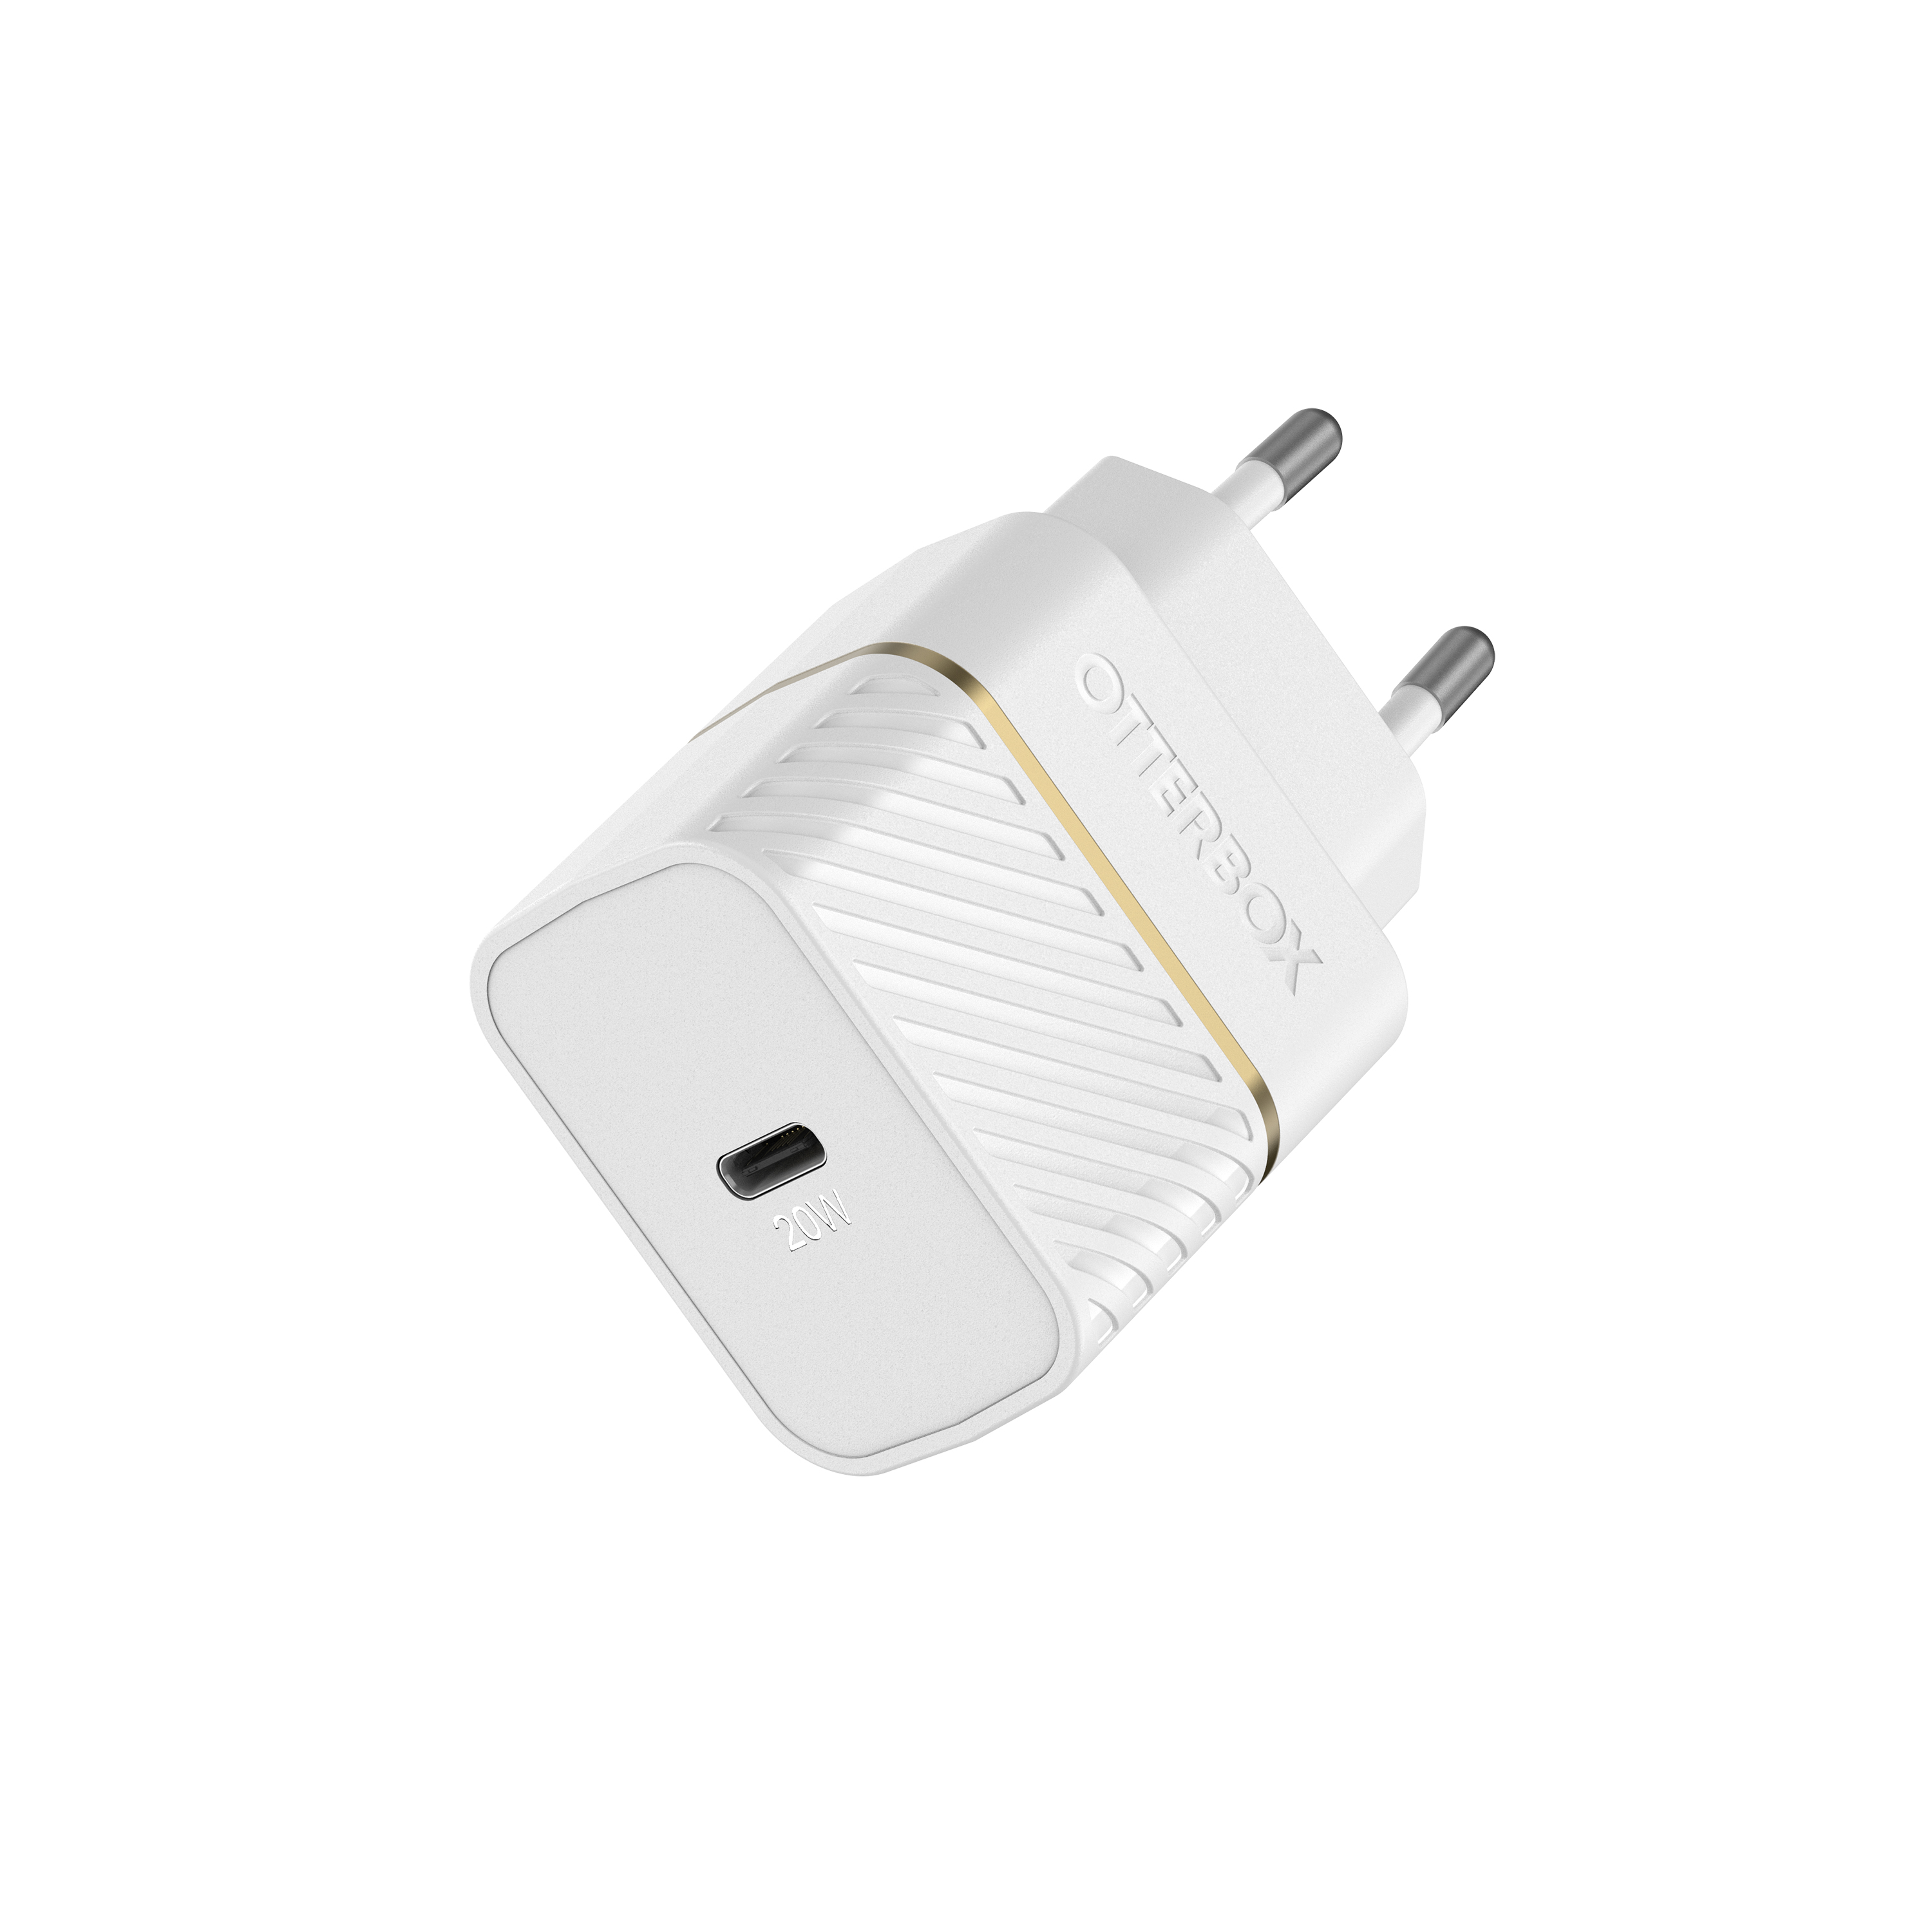 Charge rapide 3.0 20w chargeur rapide + câble Lightning Usb-c pour Iphone 11